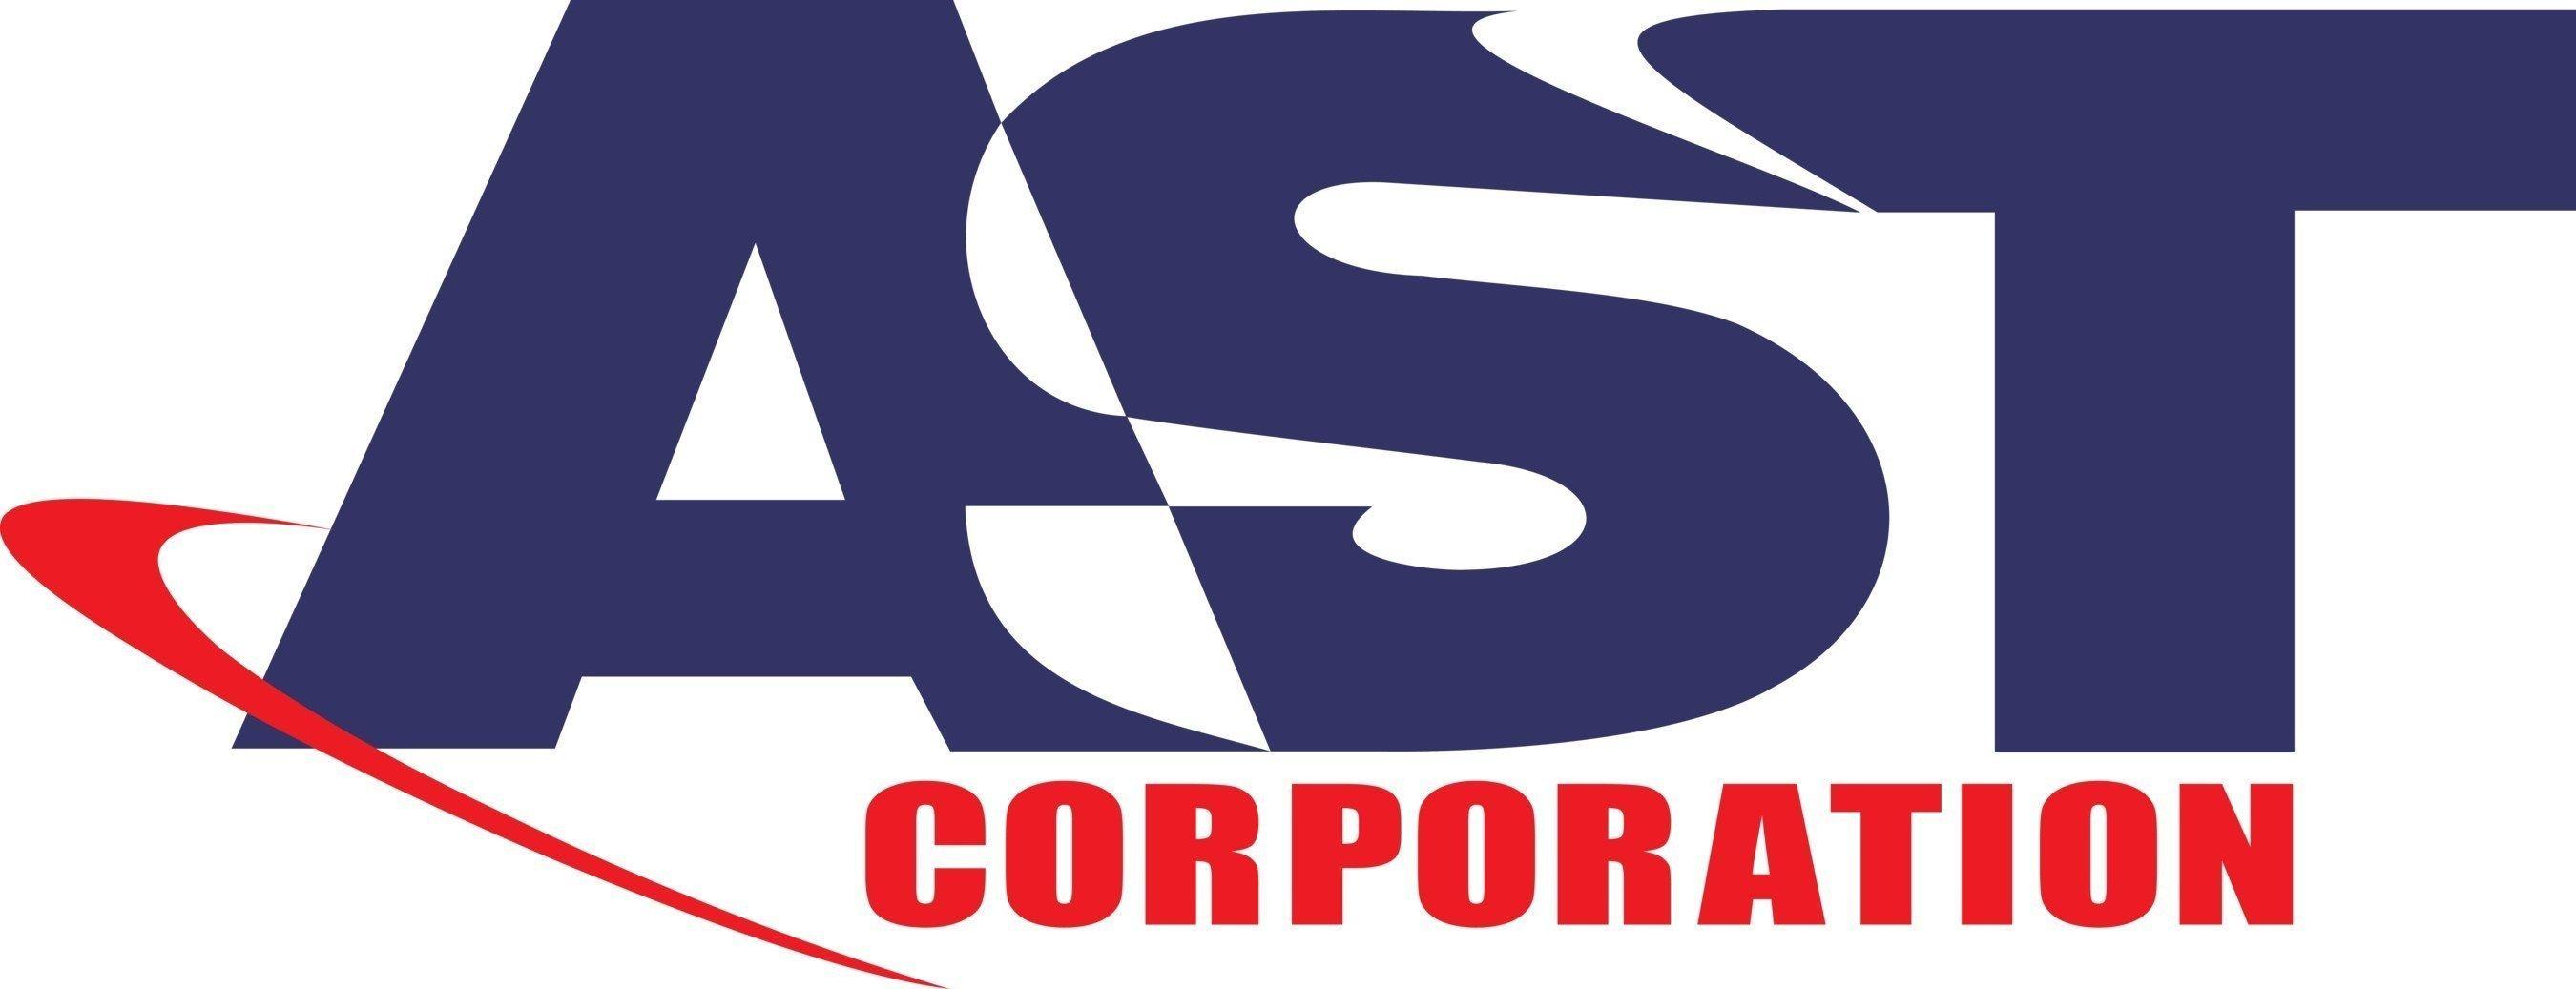 Oracle Corporation Logo - AST Implements Oracle Enterprise Resource Planning Cloud